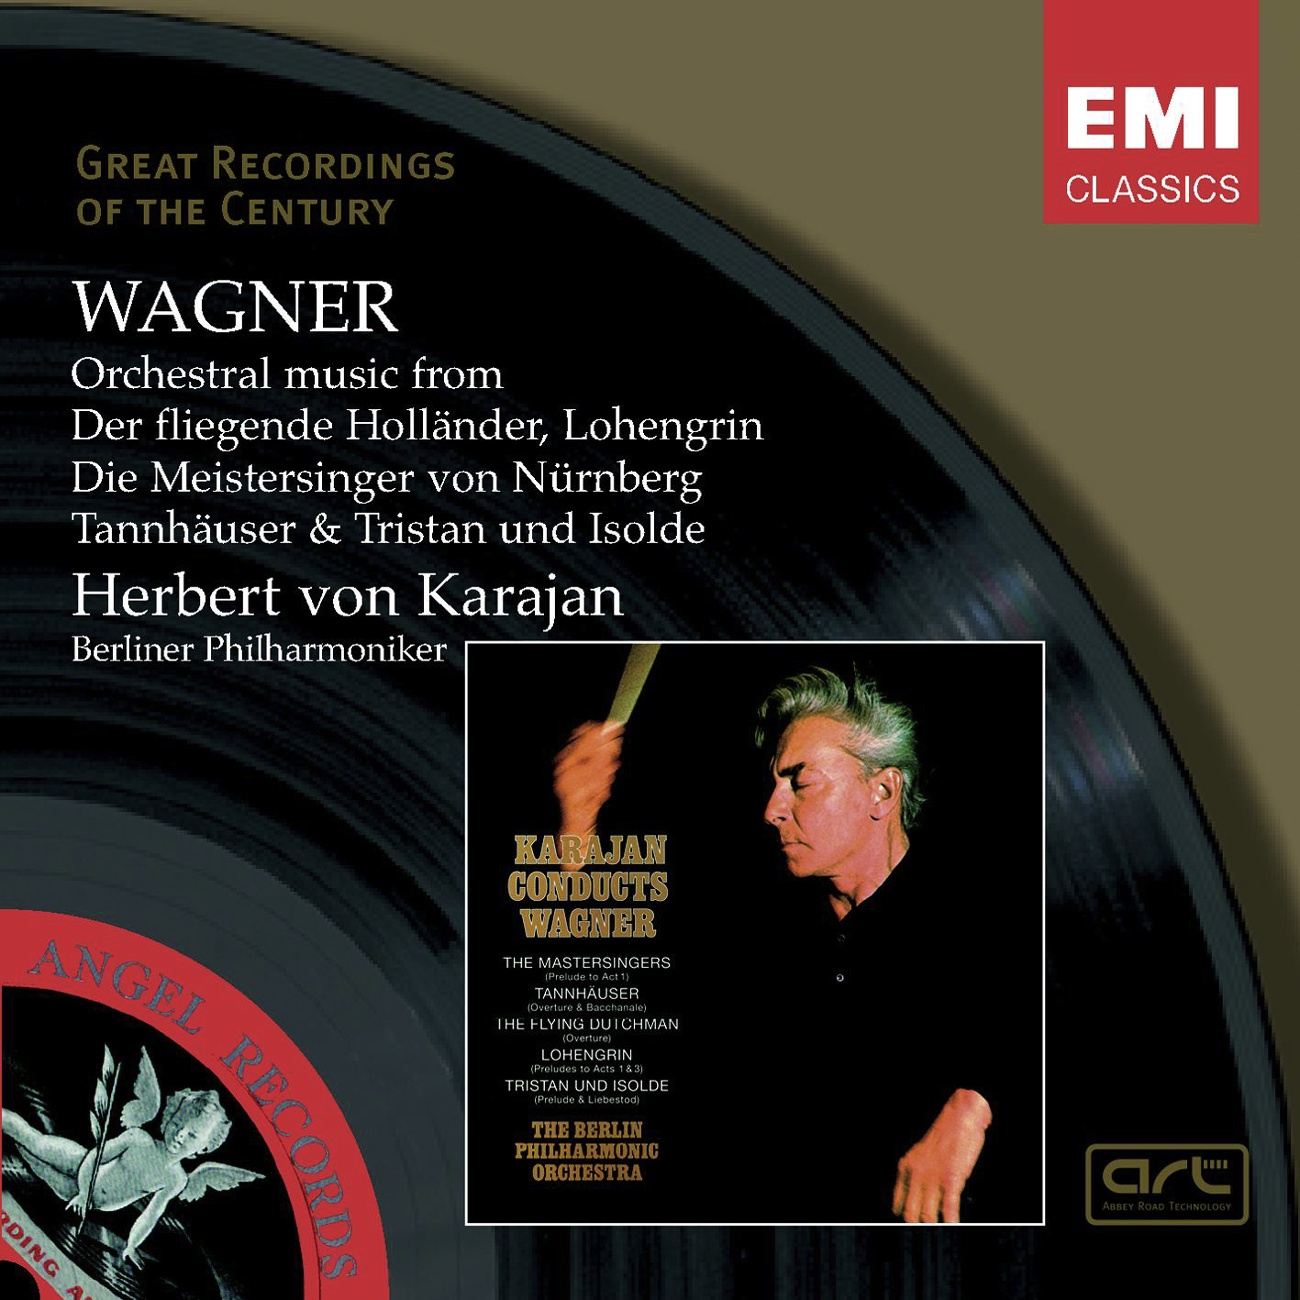 Die Meistersinger von Nürnberg - Overture (2000 Digital Remaster)